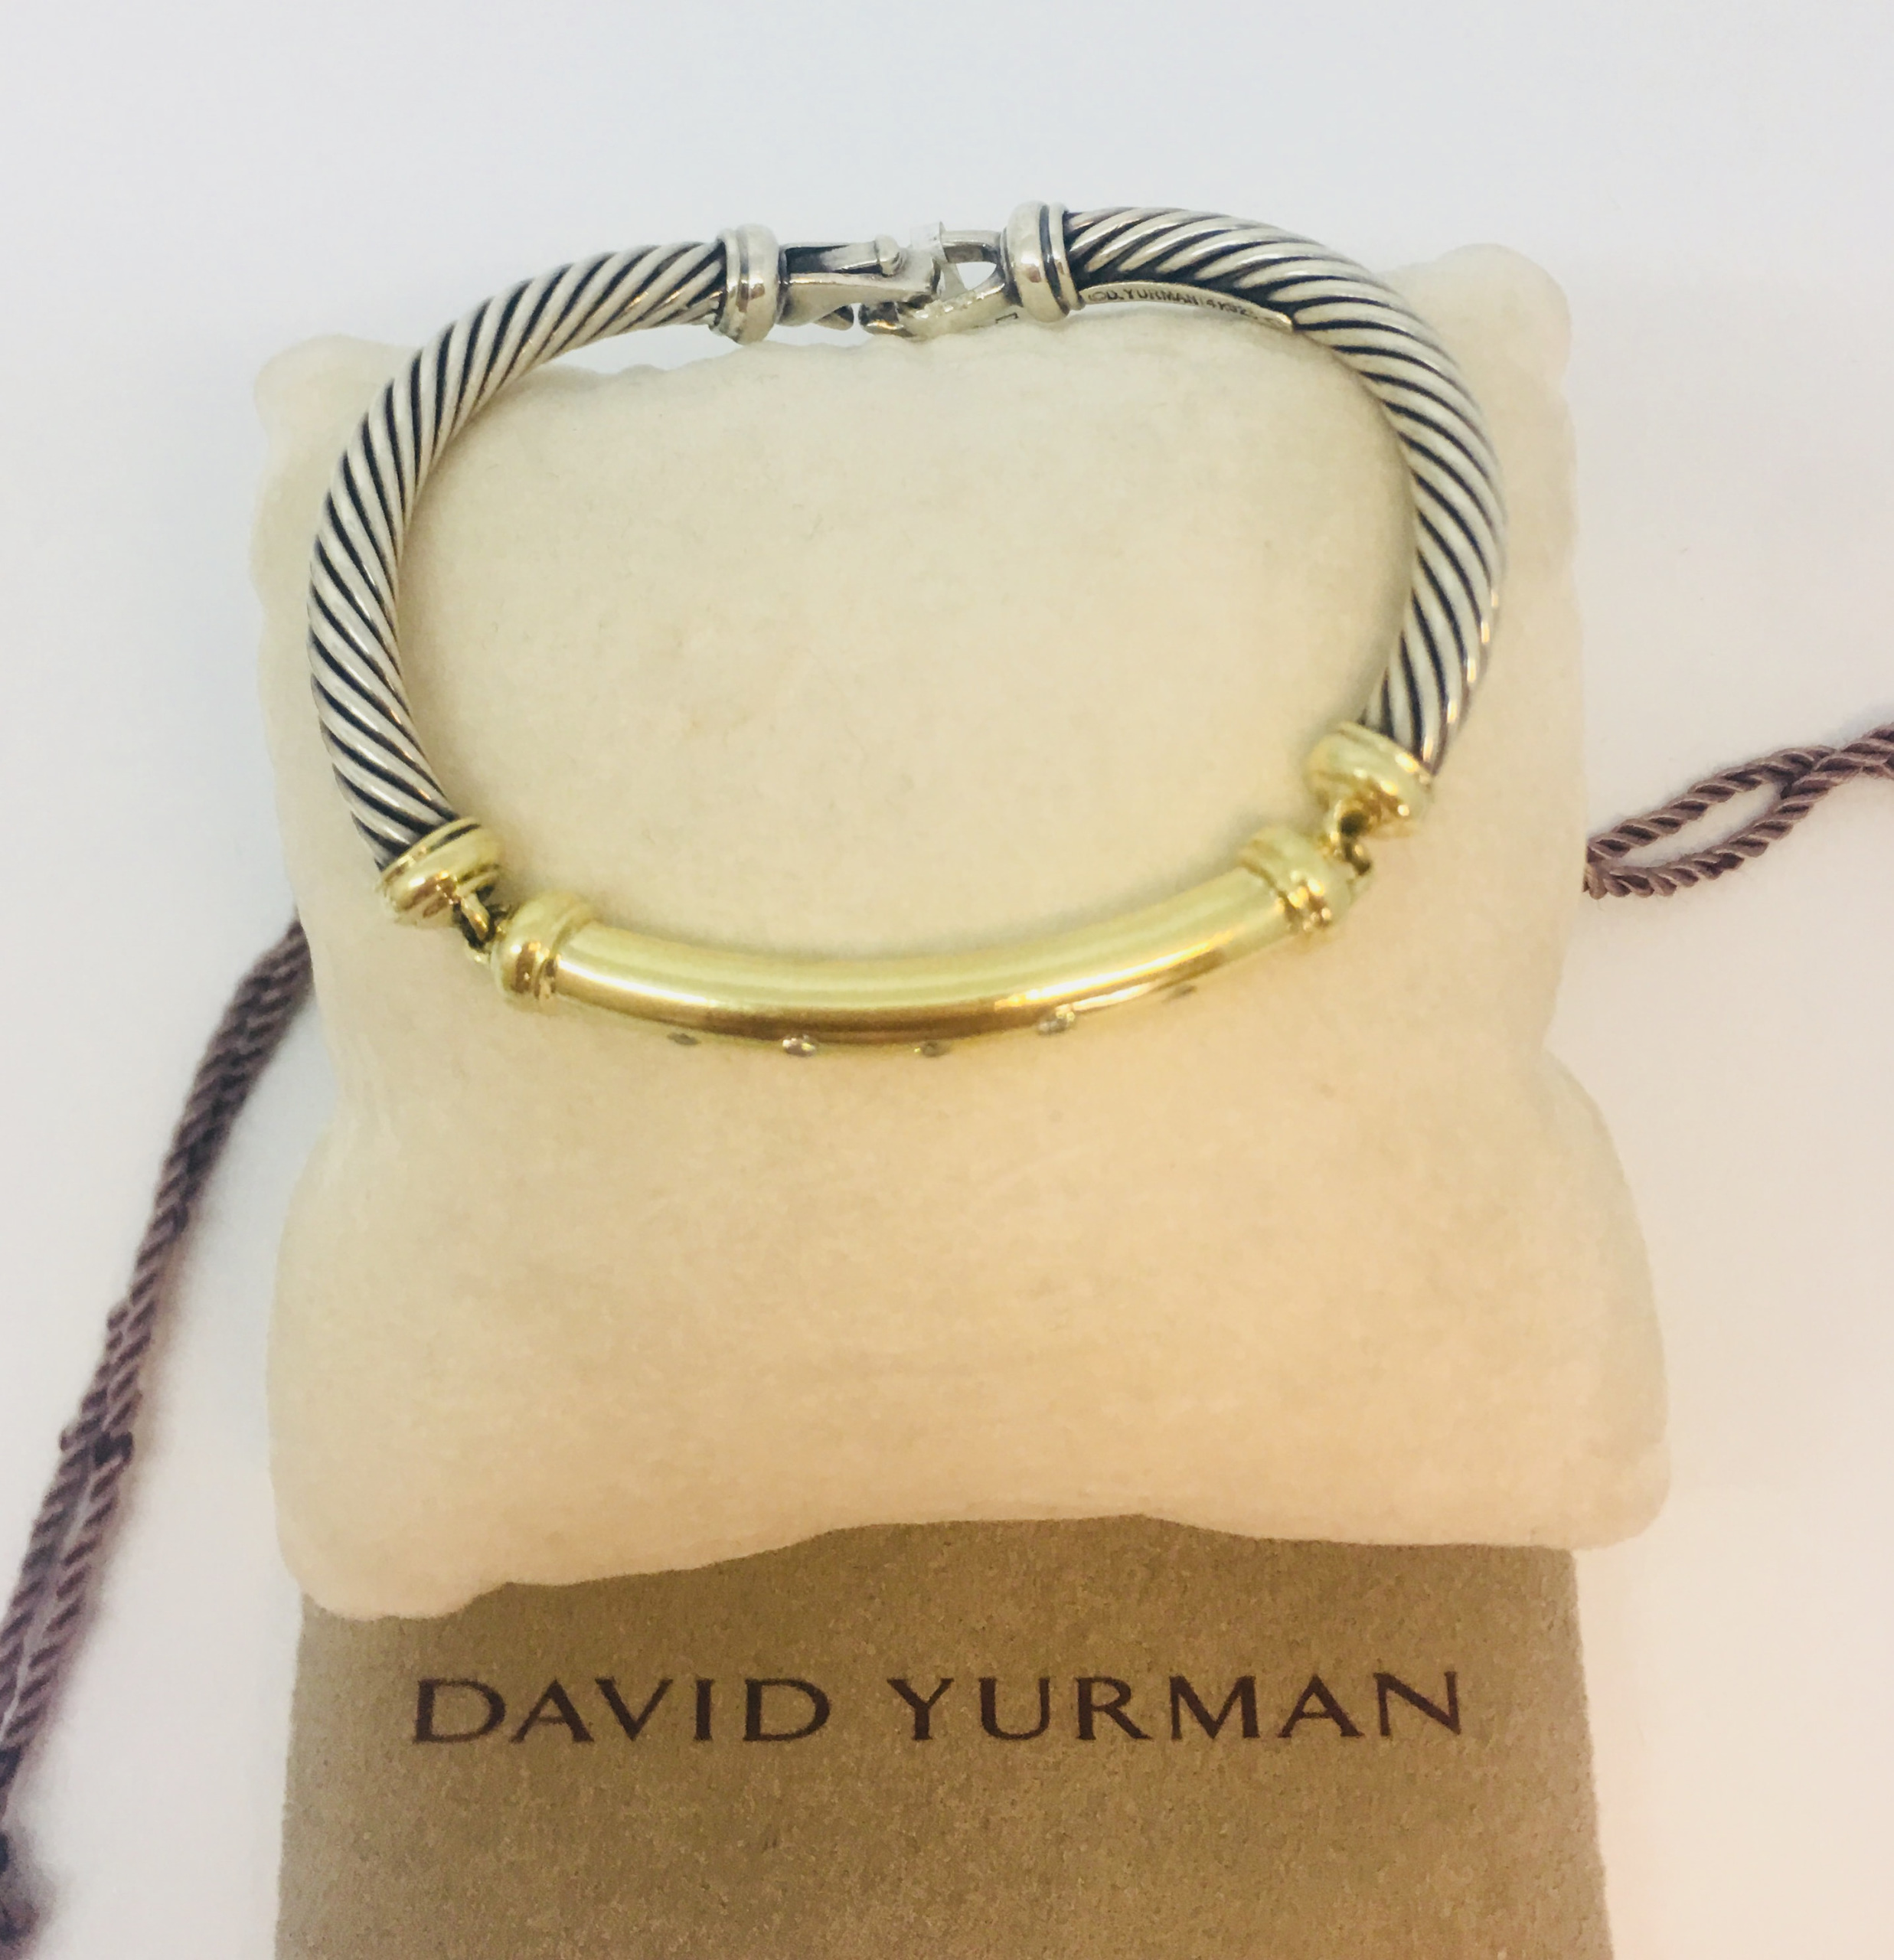 DAVID YURMAN 5mm sterling silver 14k gold metro collection bracelet.